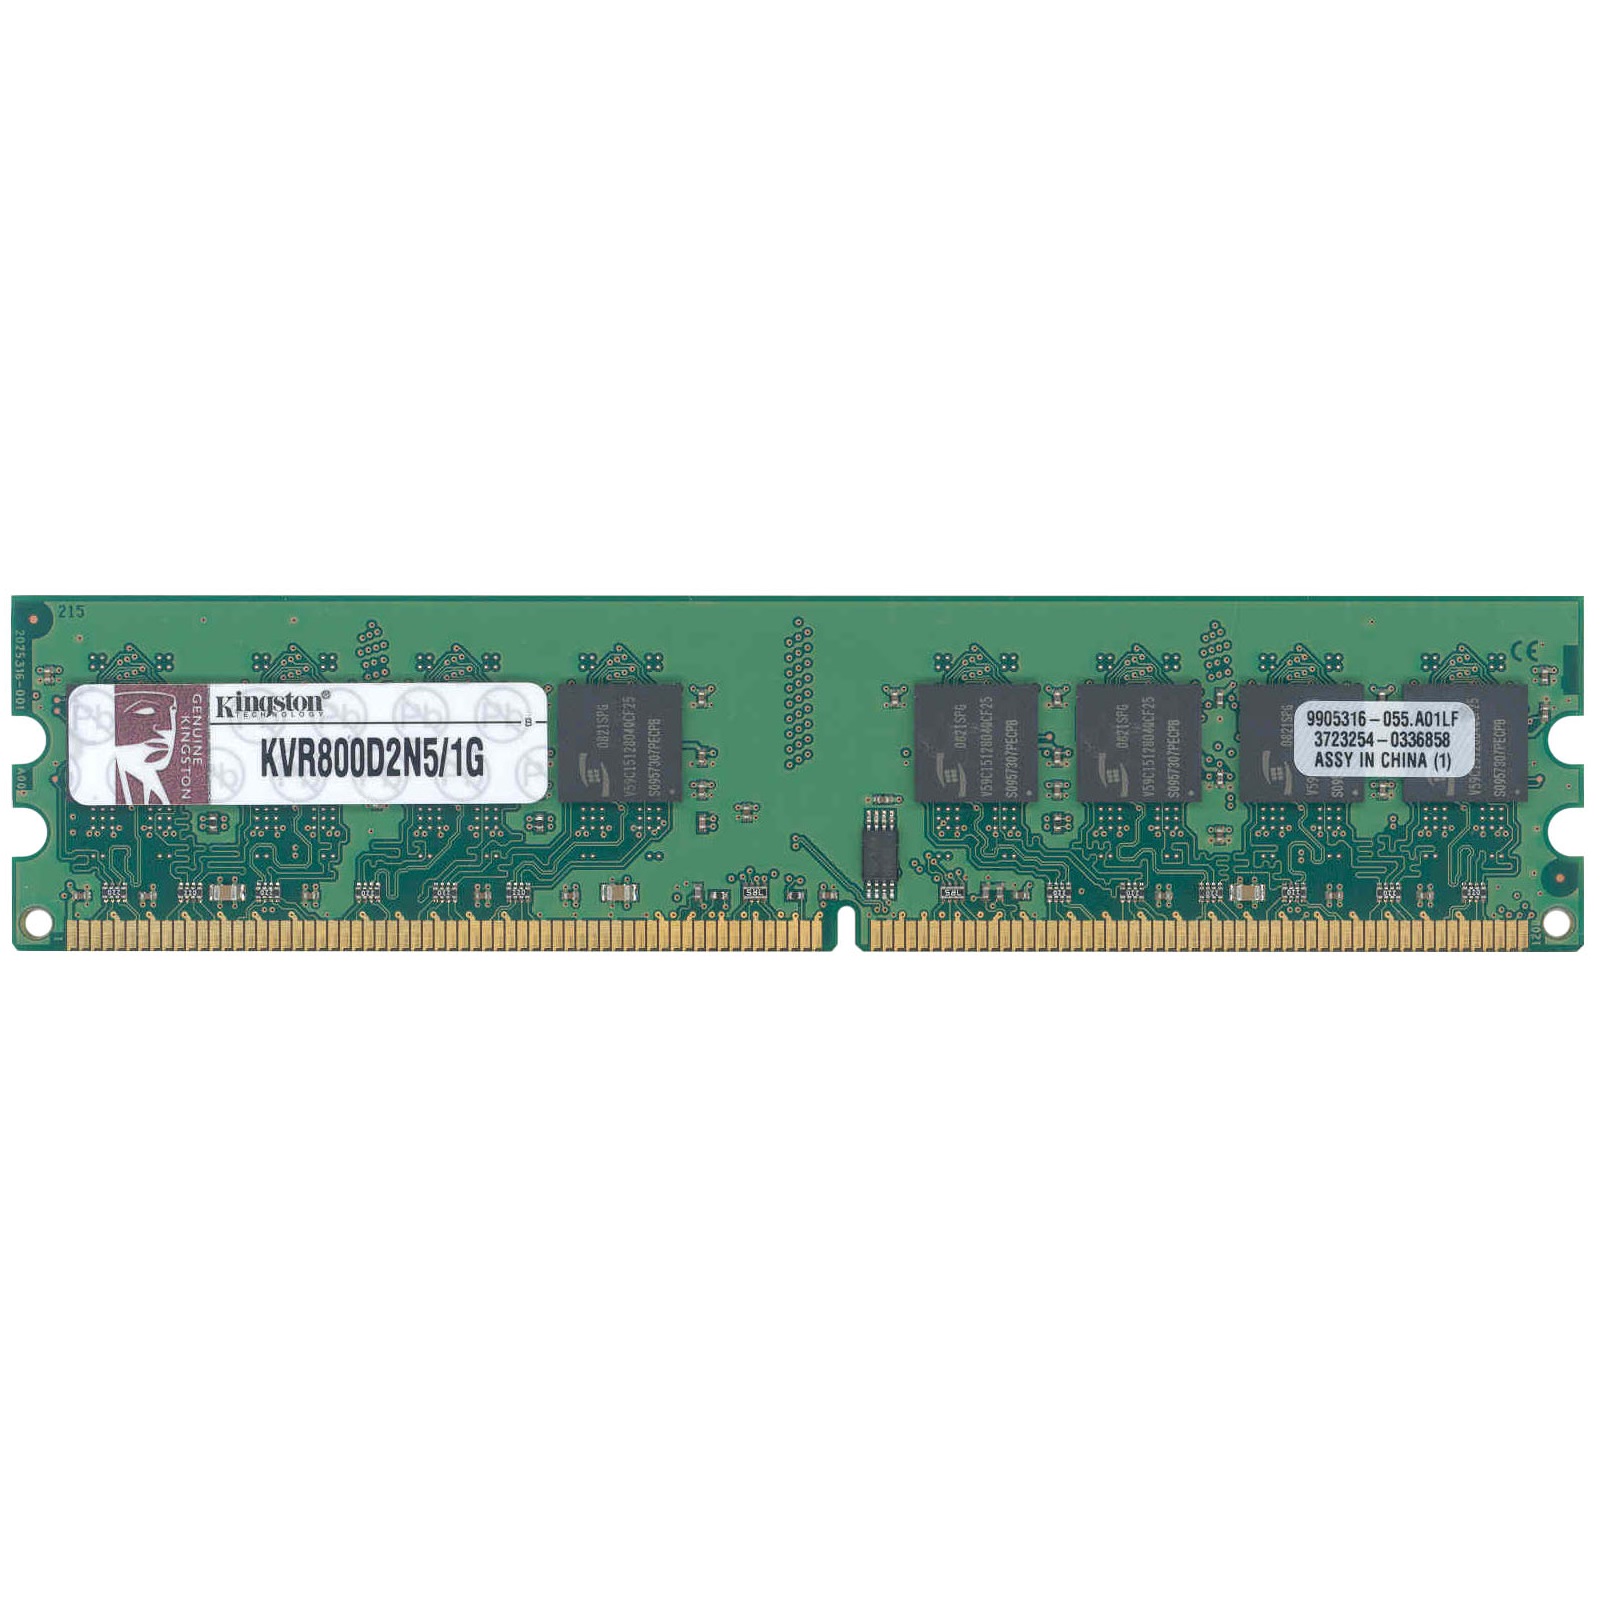 رم دسکتاپ DDR2 تک کاناله 800 مگاهرتز CL5 کینگستون مدل KVR800D2N5/1G ظرفیت 1 گیگابایت